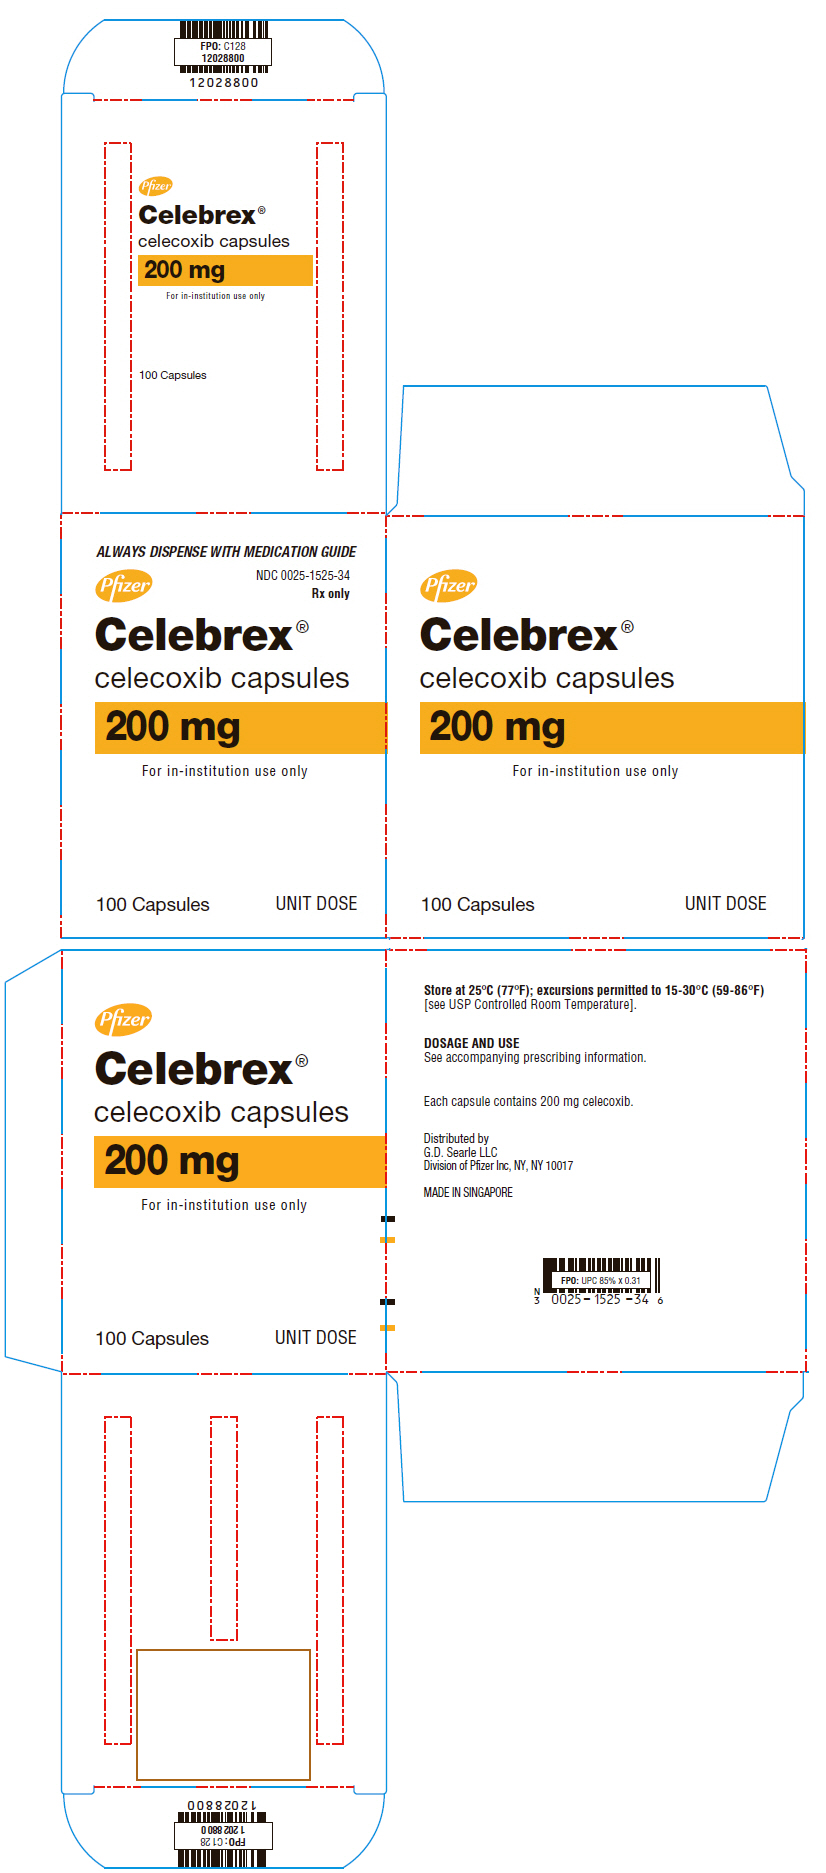 Principal Display Panel - 200 mg 10-Blister Pack Carton